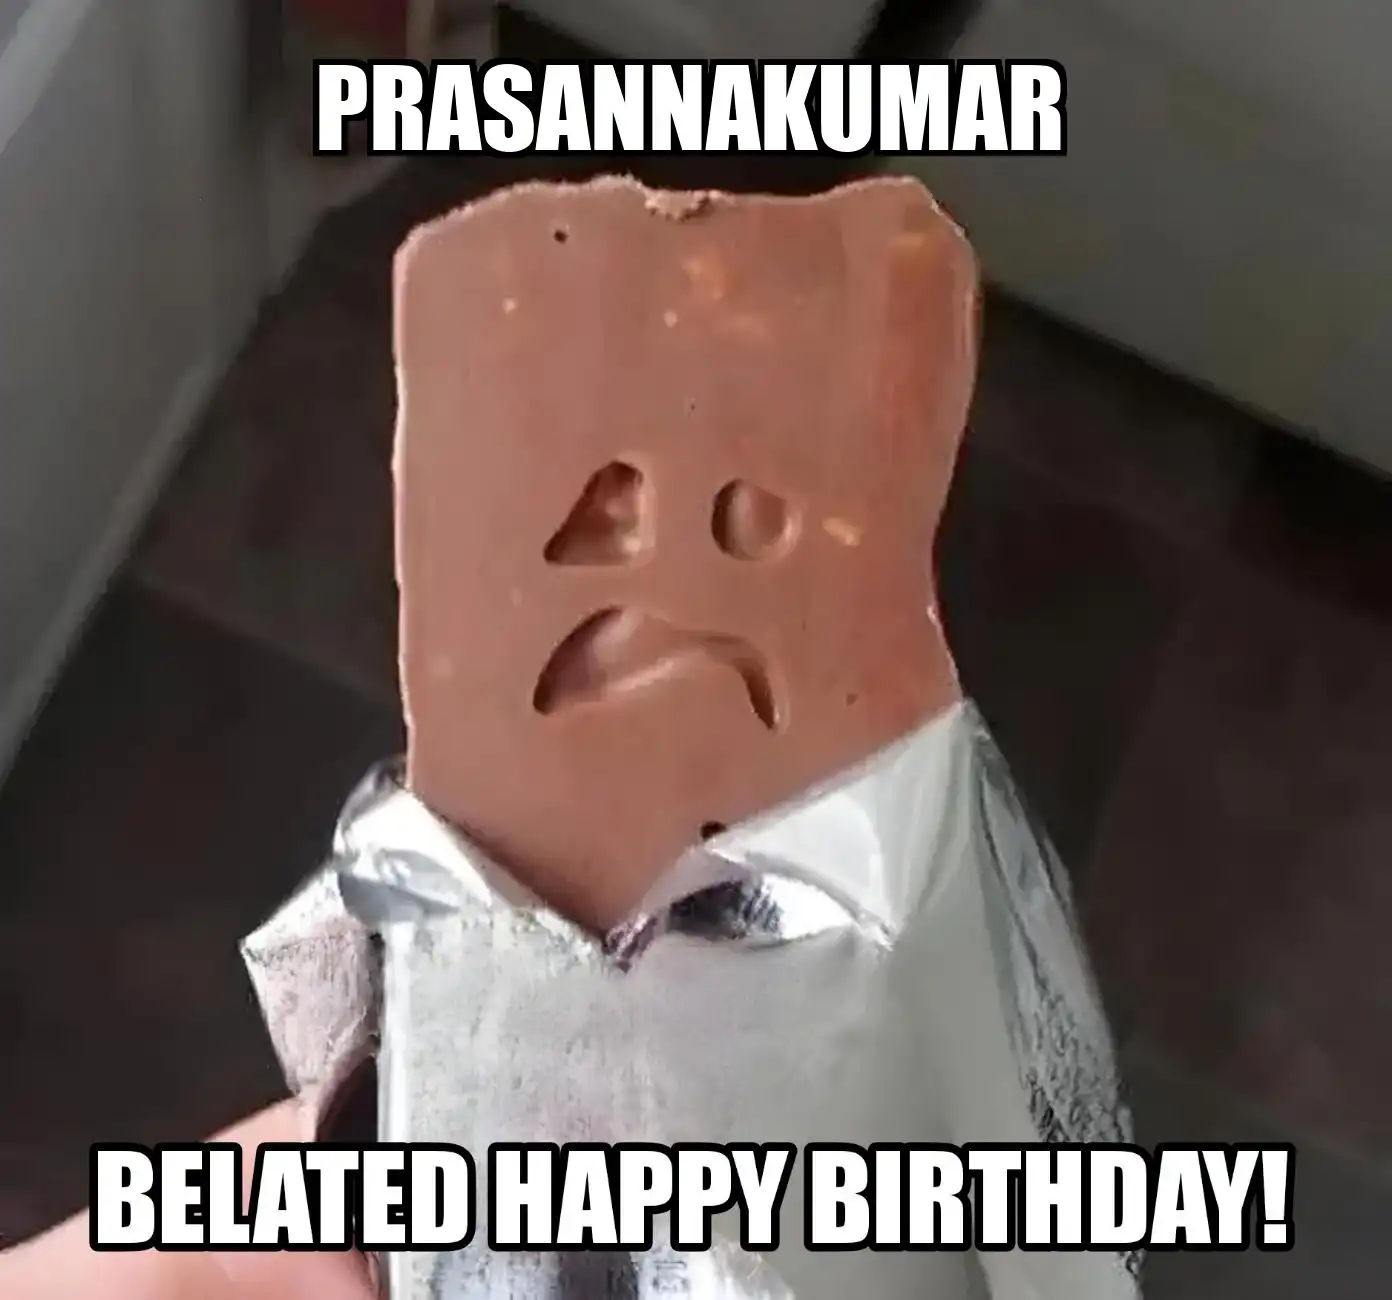 Happy Birthday Prasannakumar Belated Happy Birthday Meme